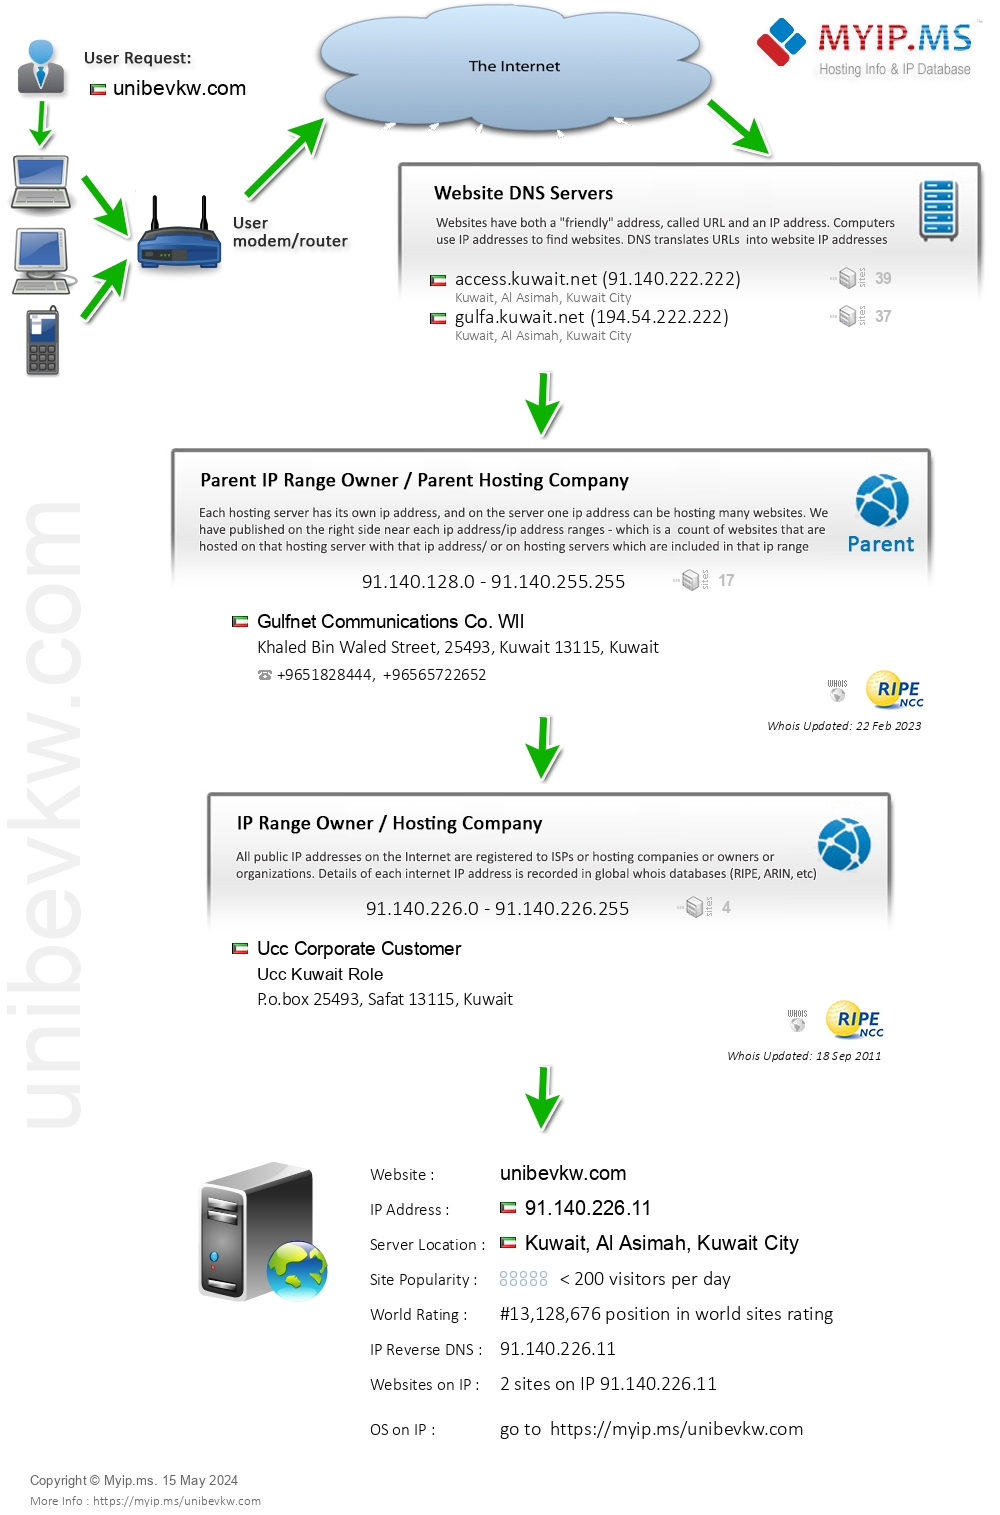 Unibevkw.com - Website Hosting Visual IP Diagram